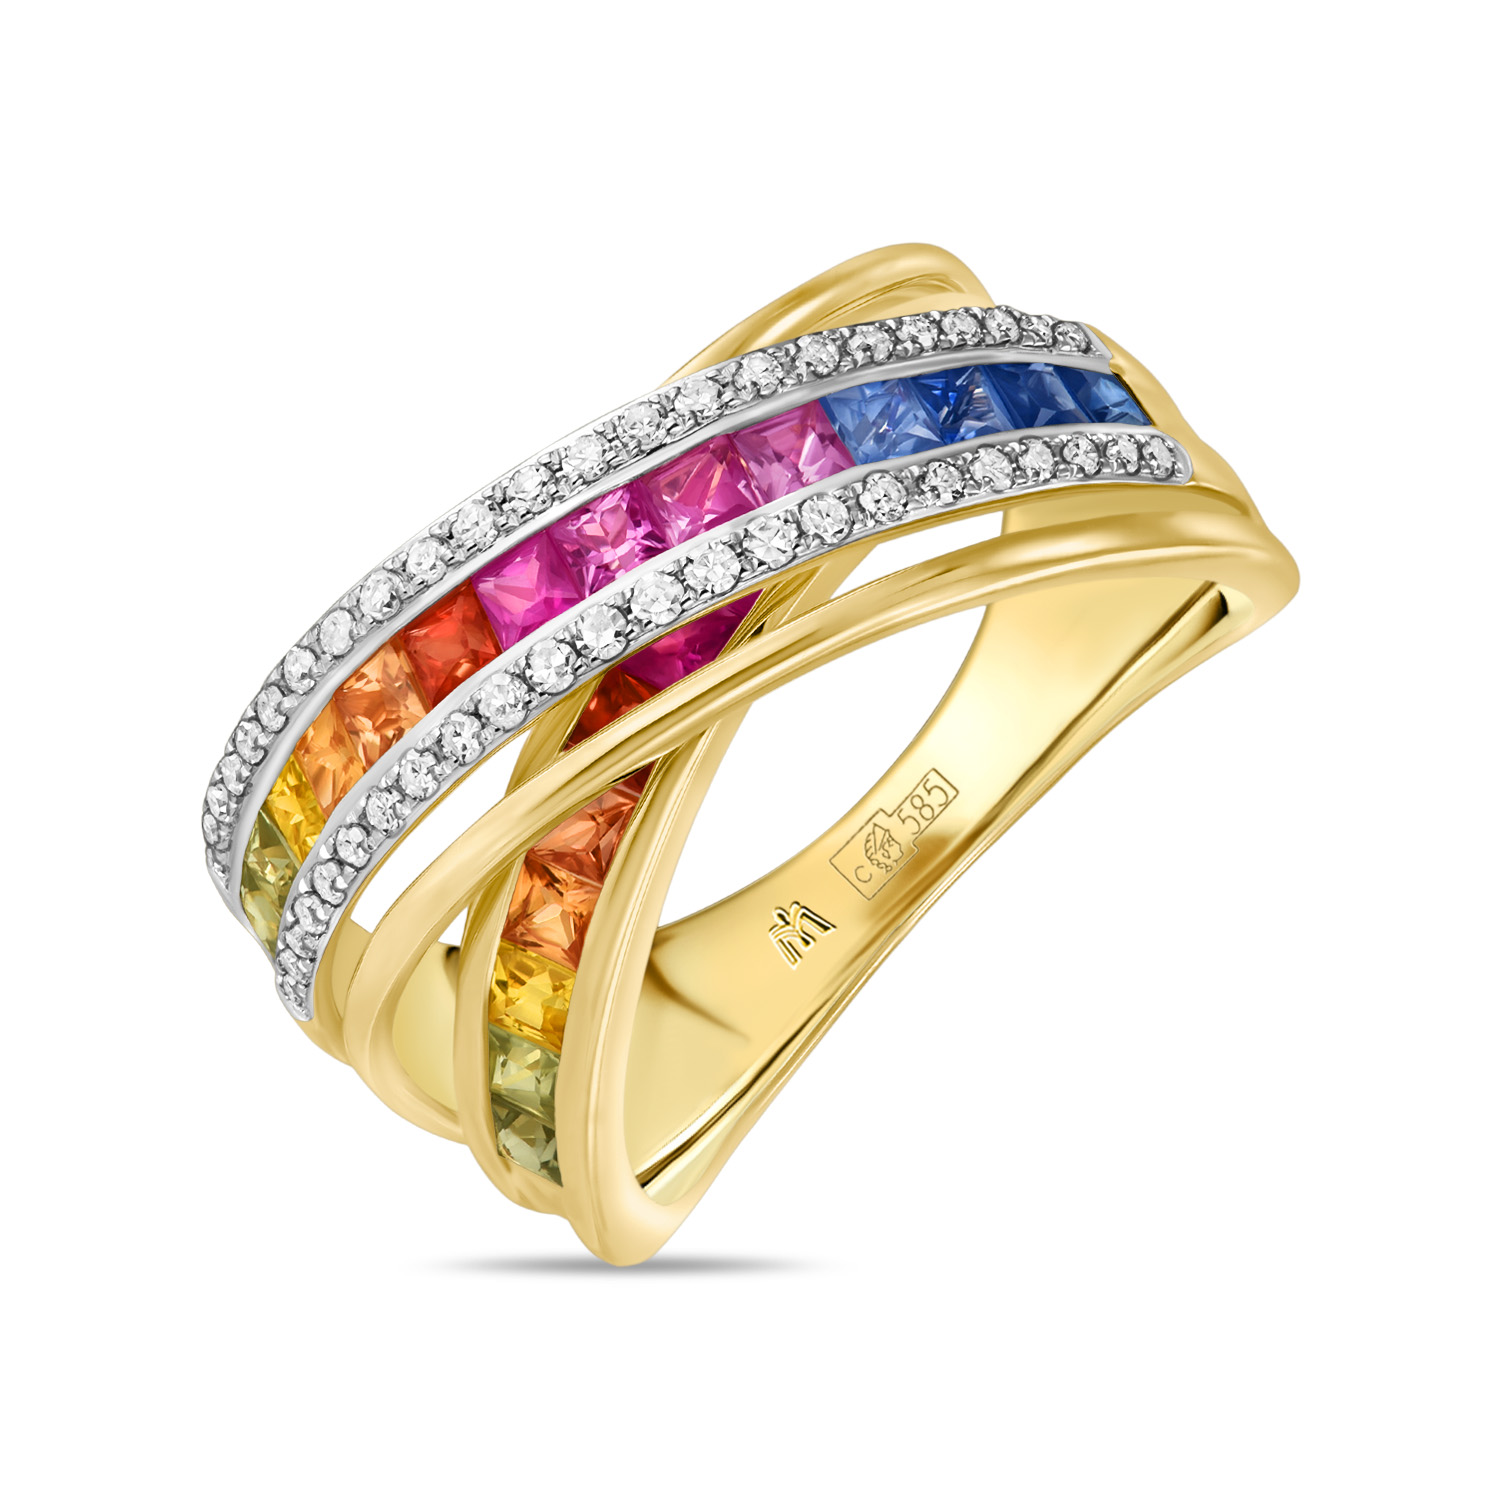 Кольца МЮЗ Кольцо с бриллиантами, сапфирами и цветными сапфирами miuz ru кольцо c бриллиантами и цветными сапфирами